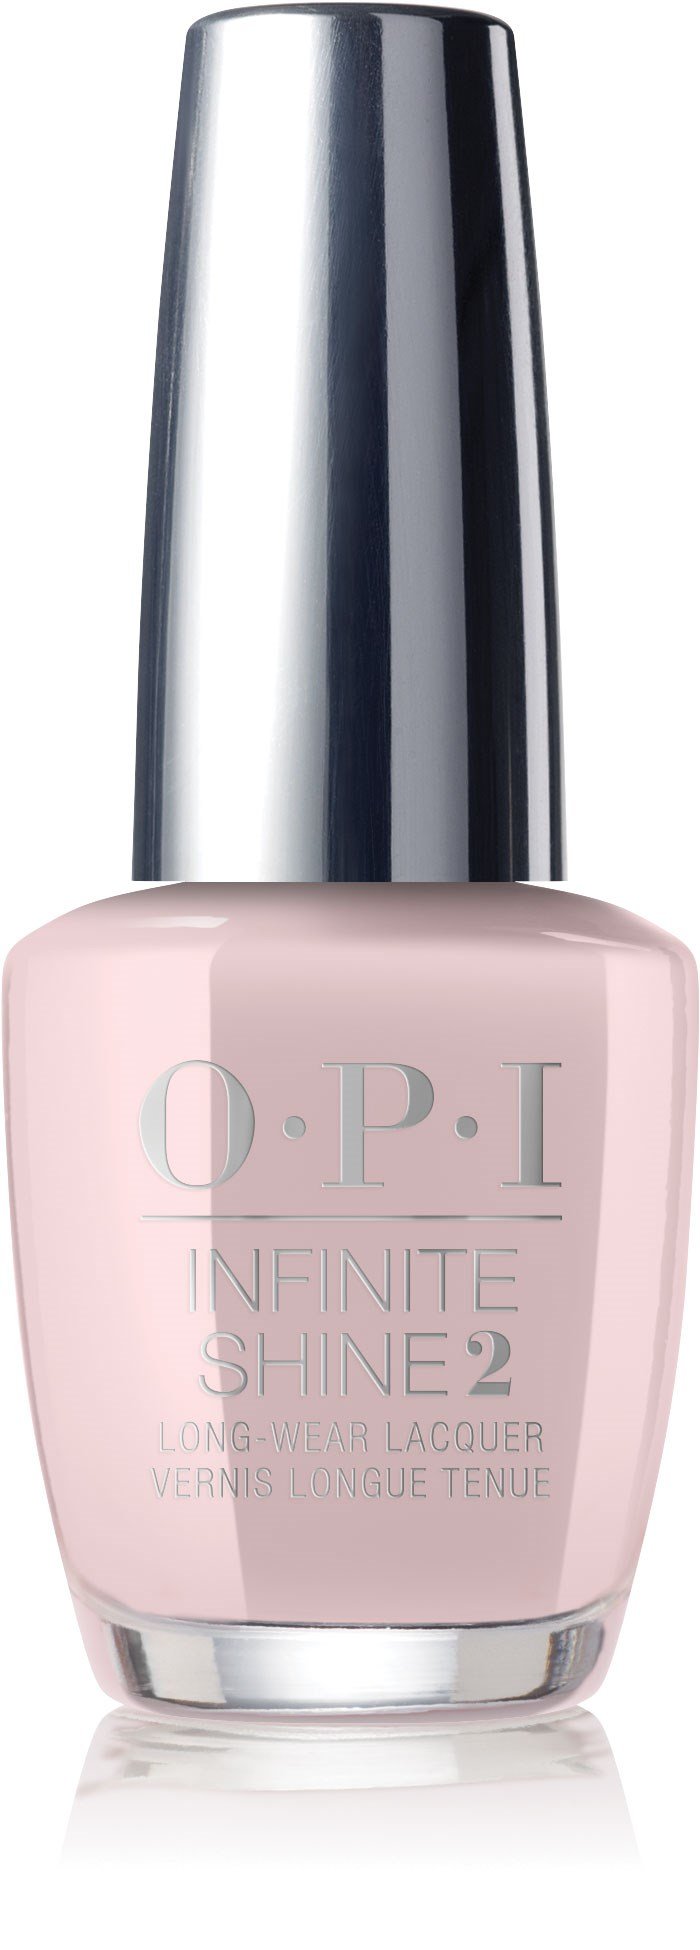 OPI Infinite Shine - No me hagas bossa nova